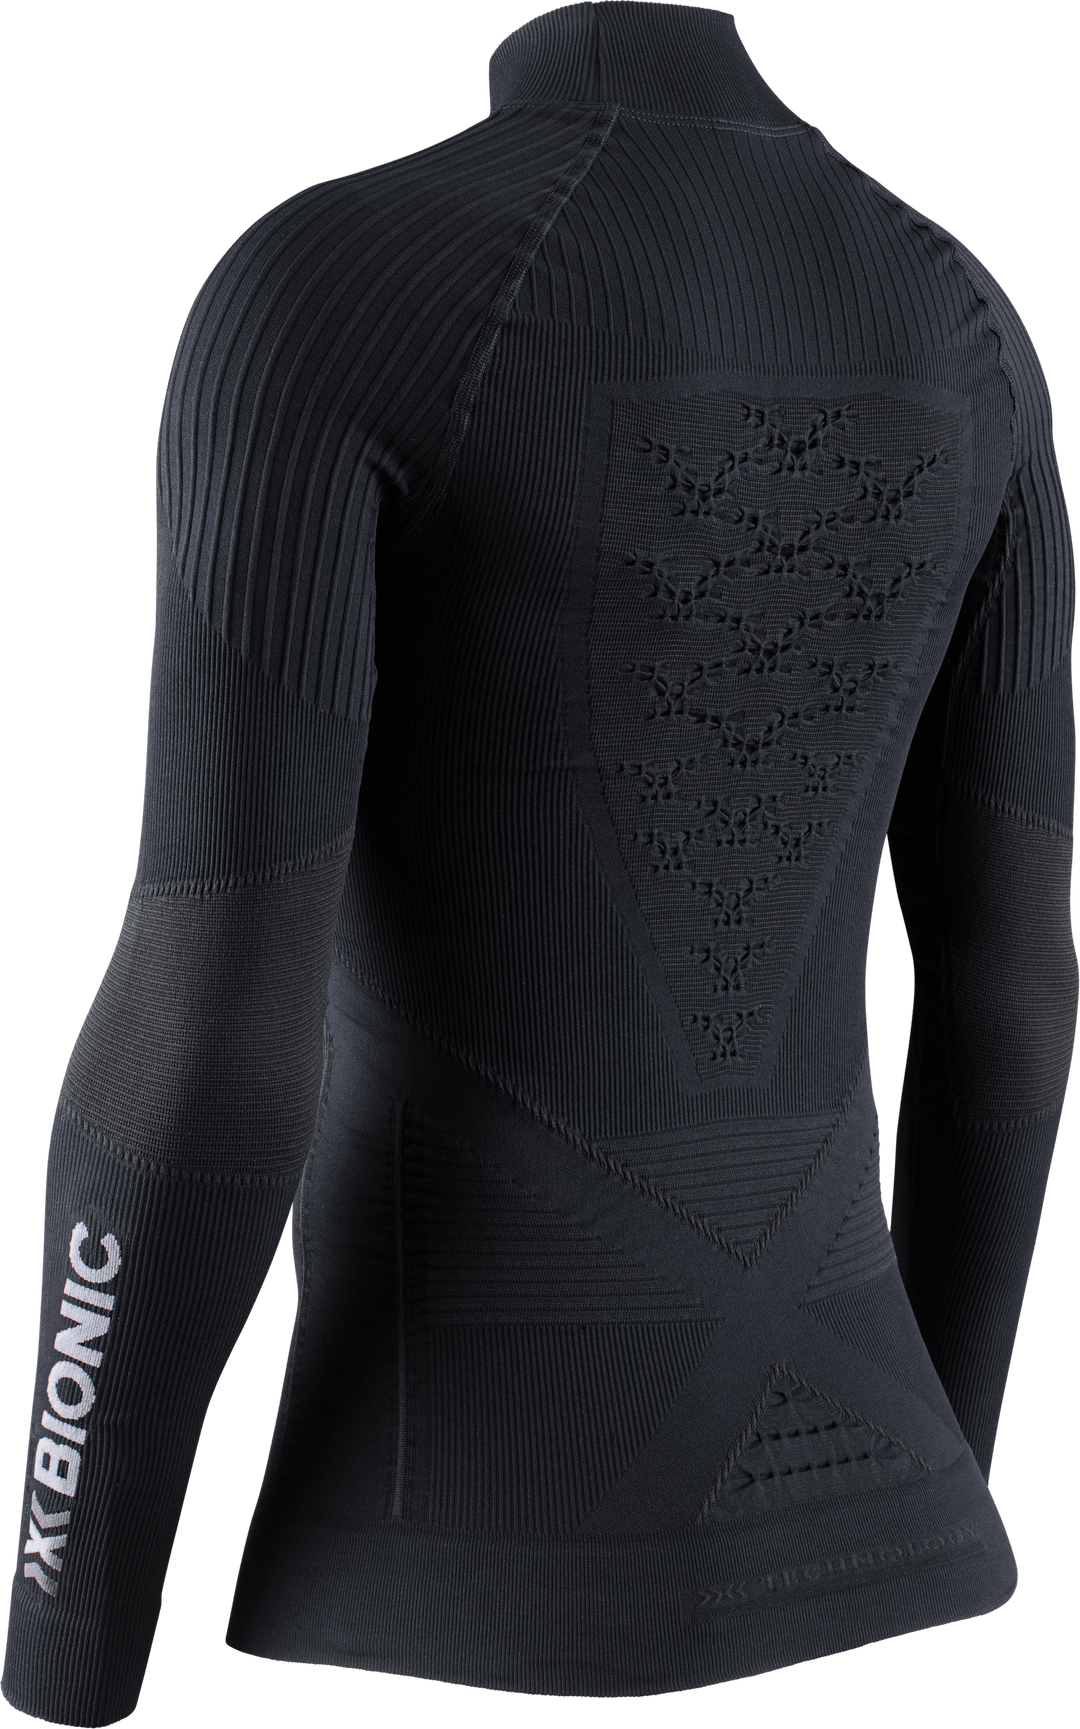 3/4 technical tights X-BIONICX Invent 4.0 (black/charcoal) woman -  Alpinstore